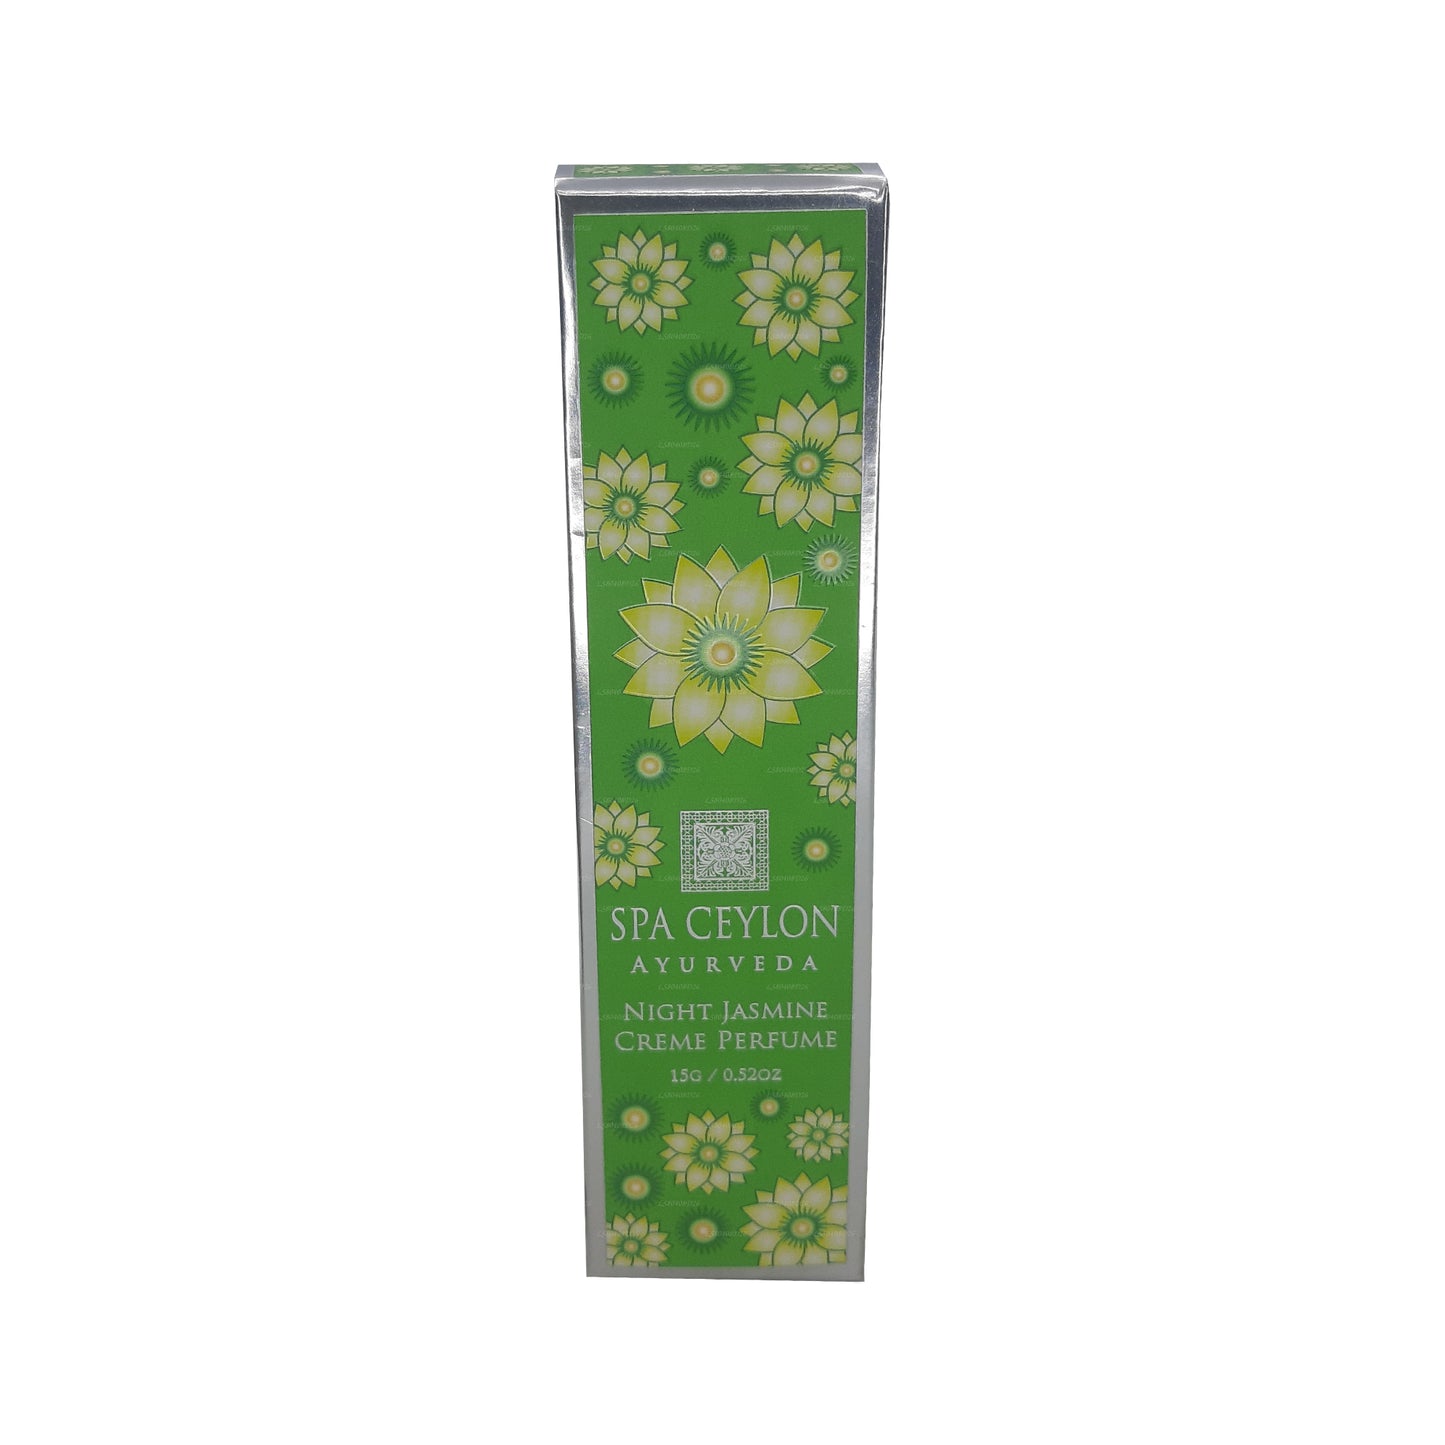 Spa Ceylon Night Jasmine Creme Parfum (15 g)